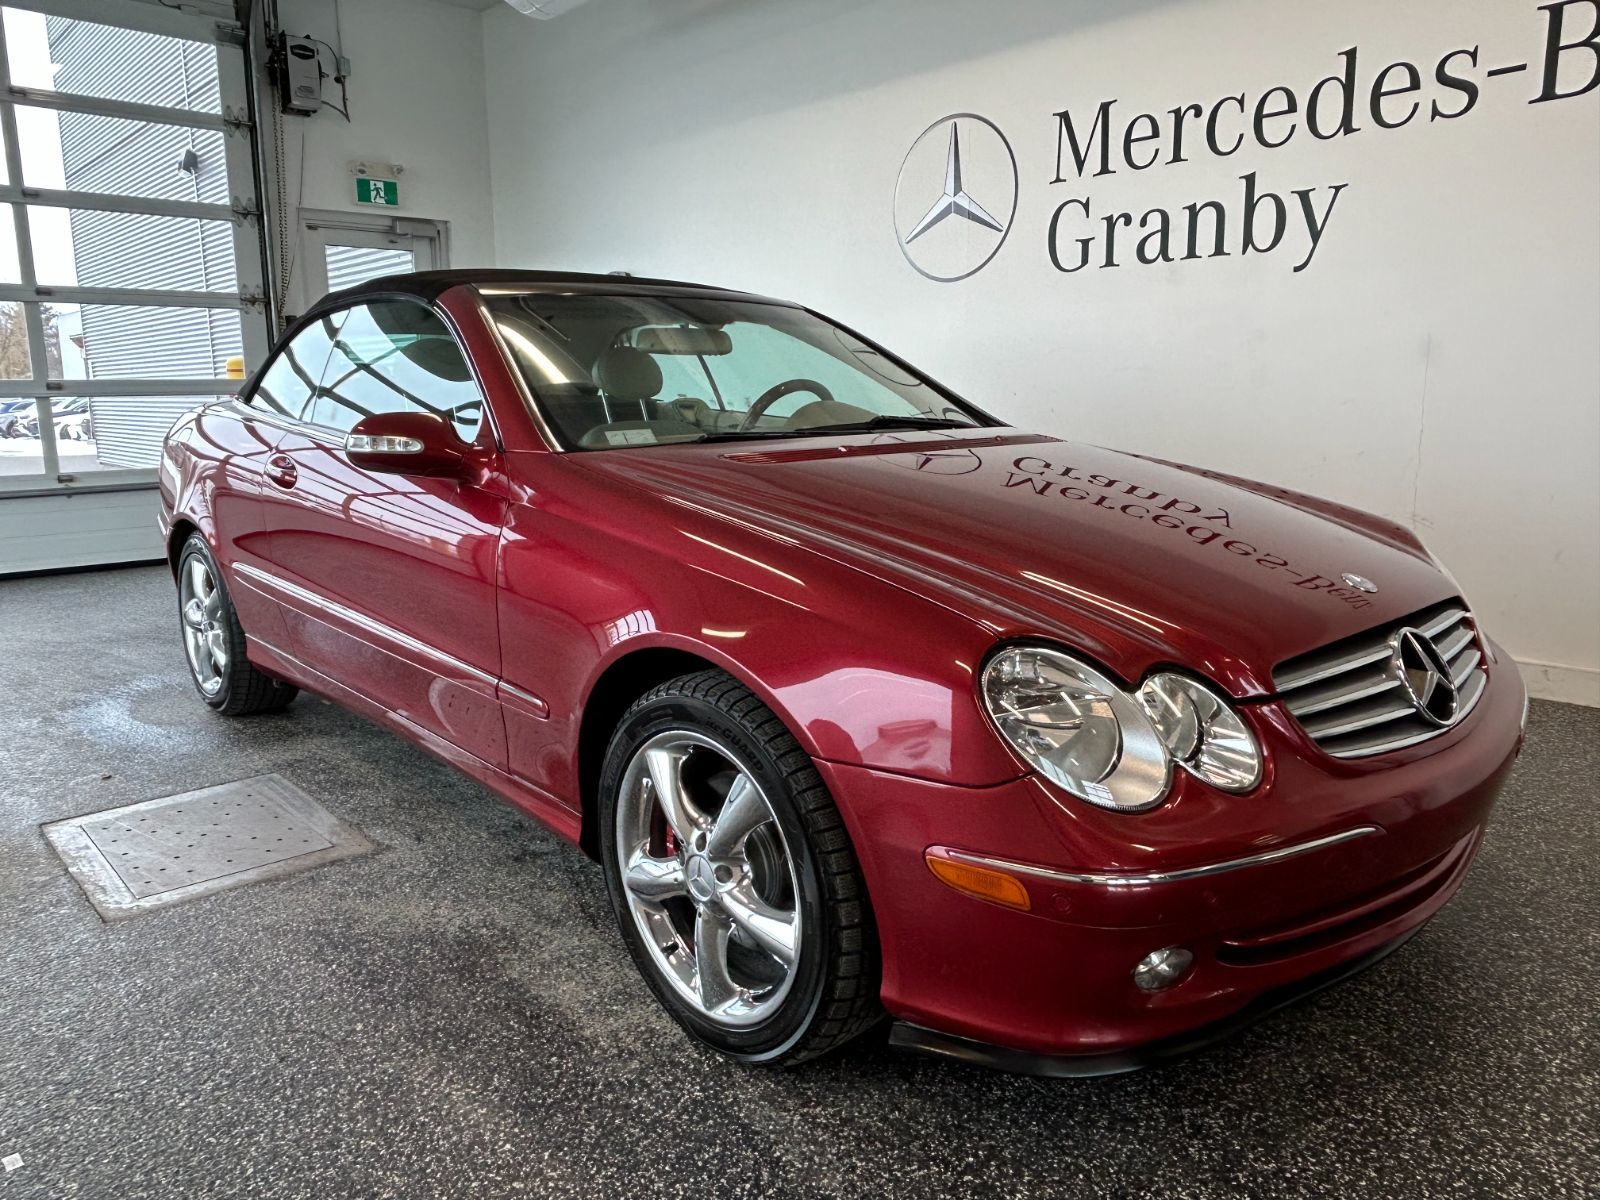 Mercedes-Benz Granby  Véhicules d'occasion à vendre